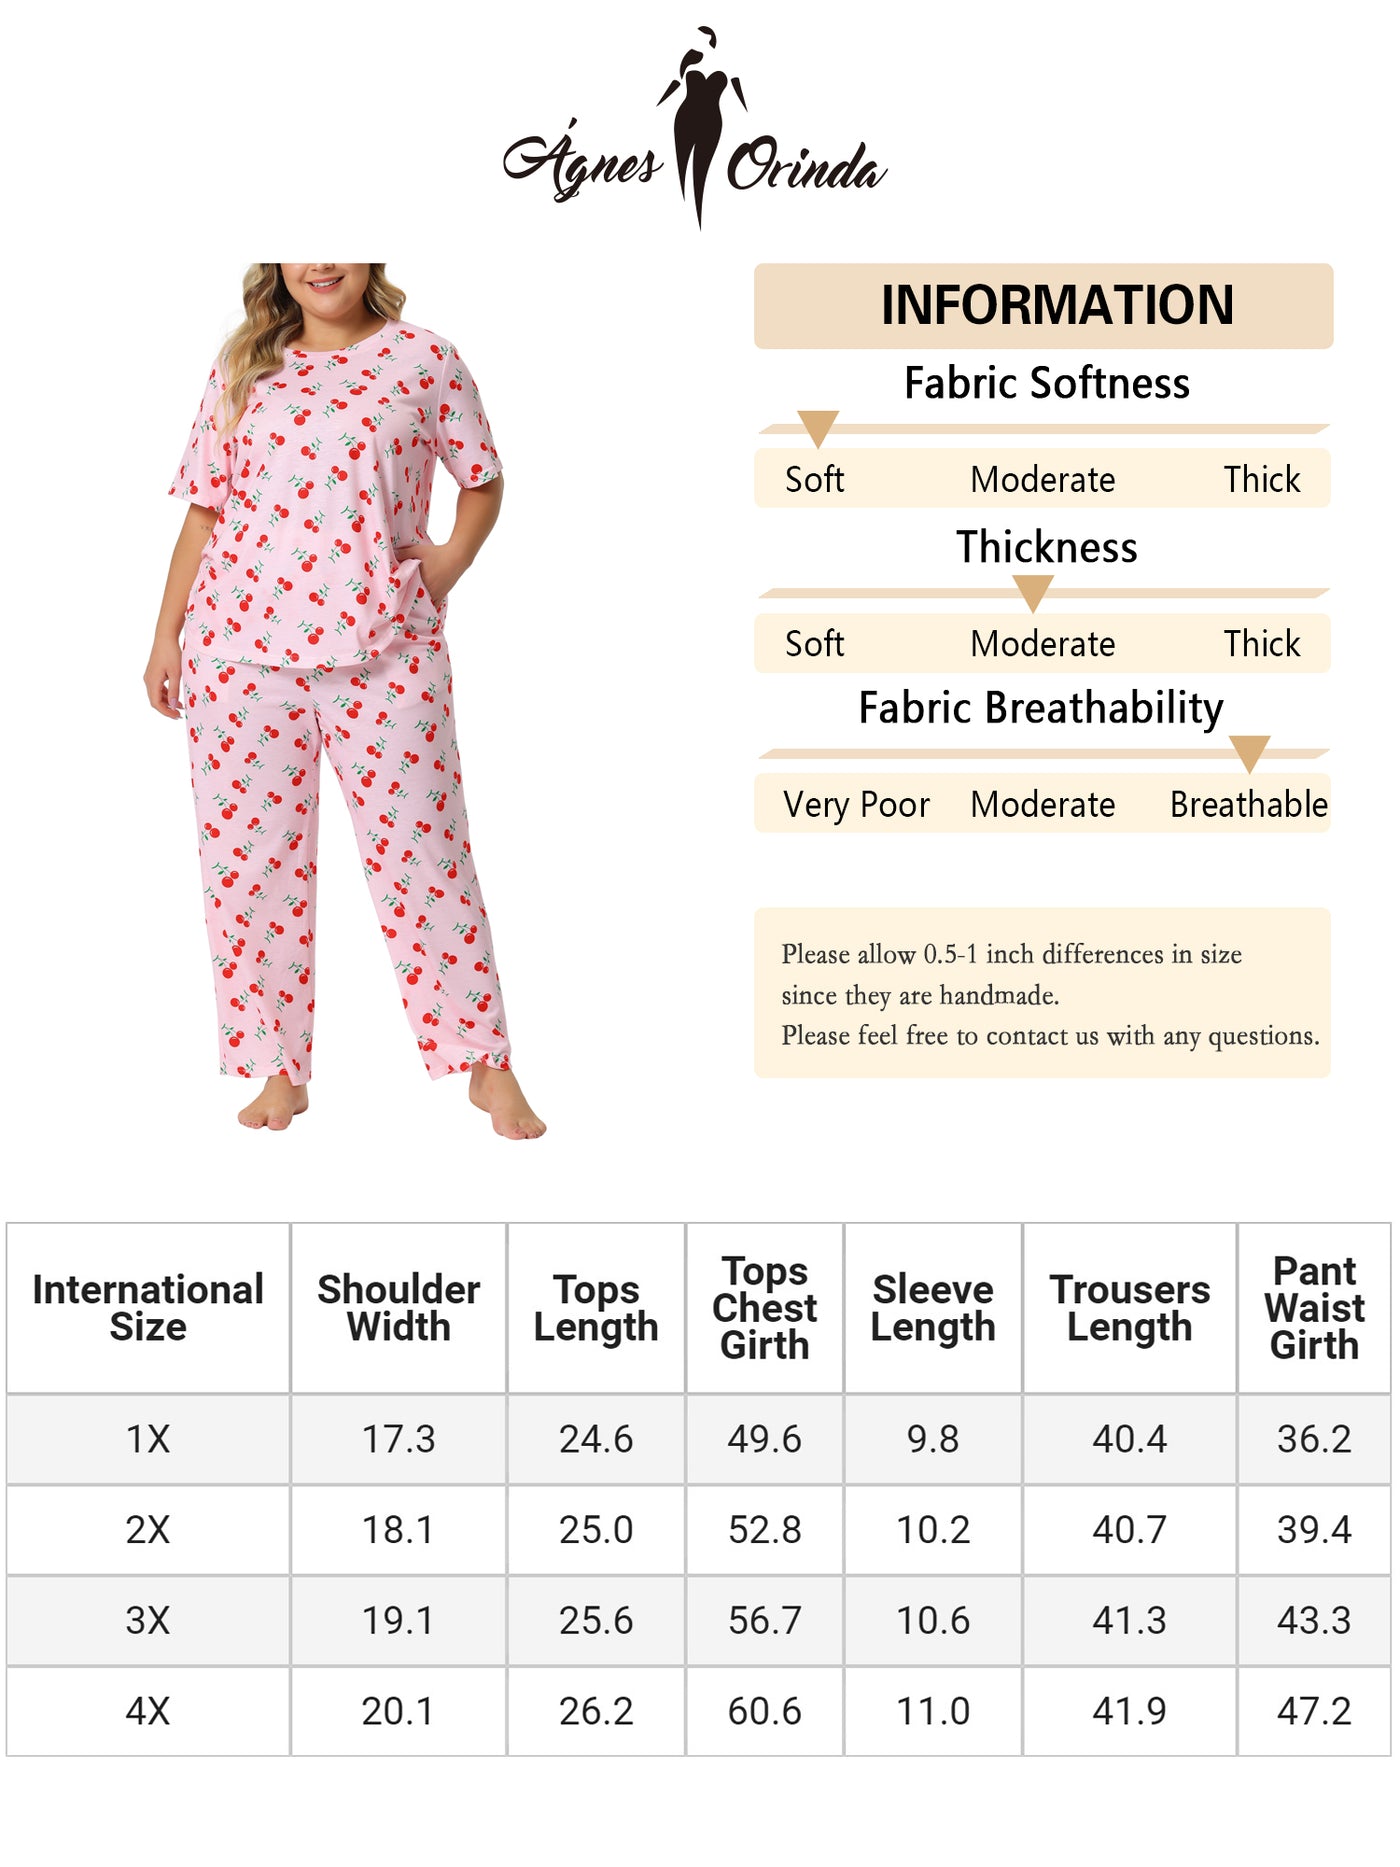 Bublédon Plus Size Pajamas Sets for Women Short Sleeve Cherry Print Elastic Soft Pockets Nightwear Sleepwear